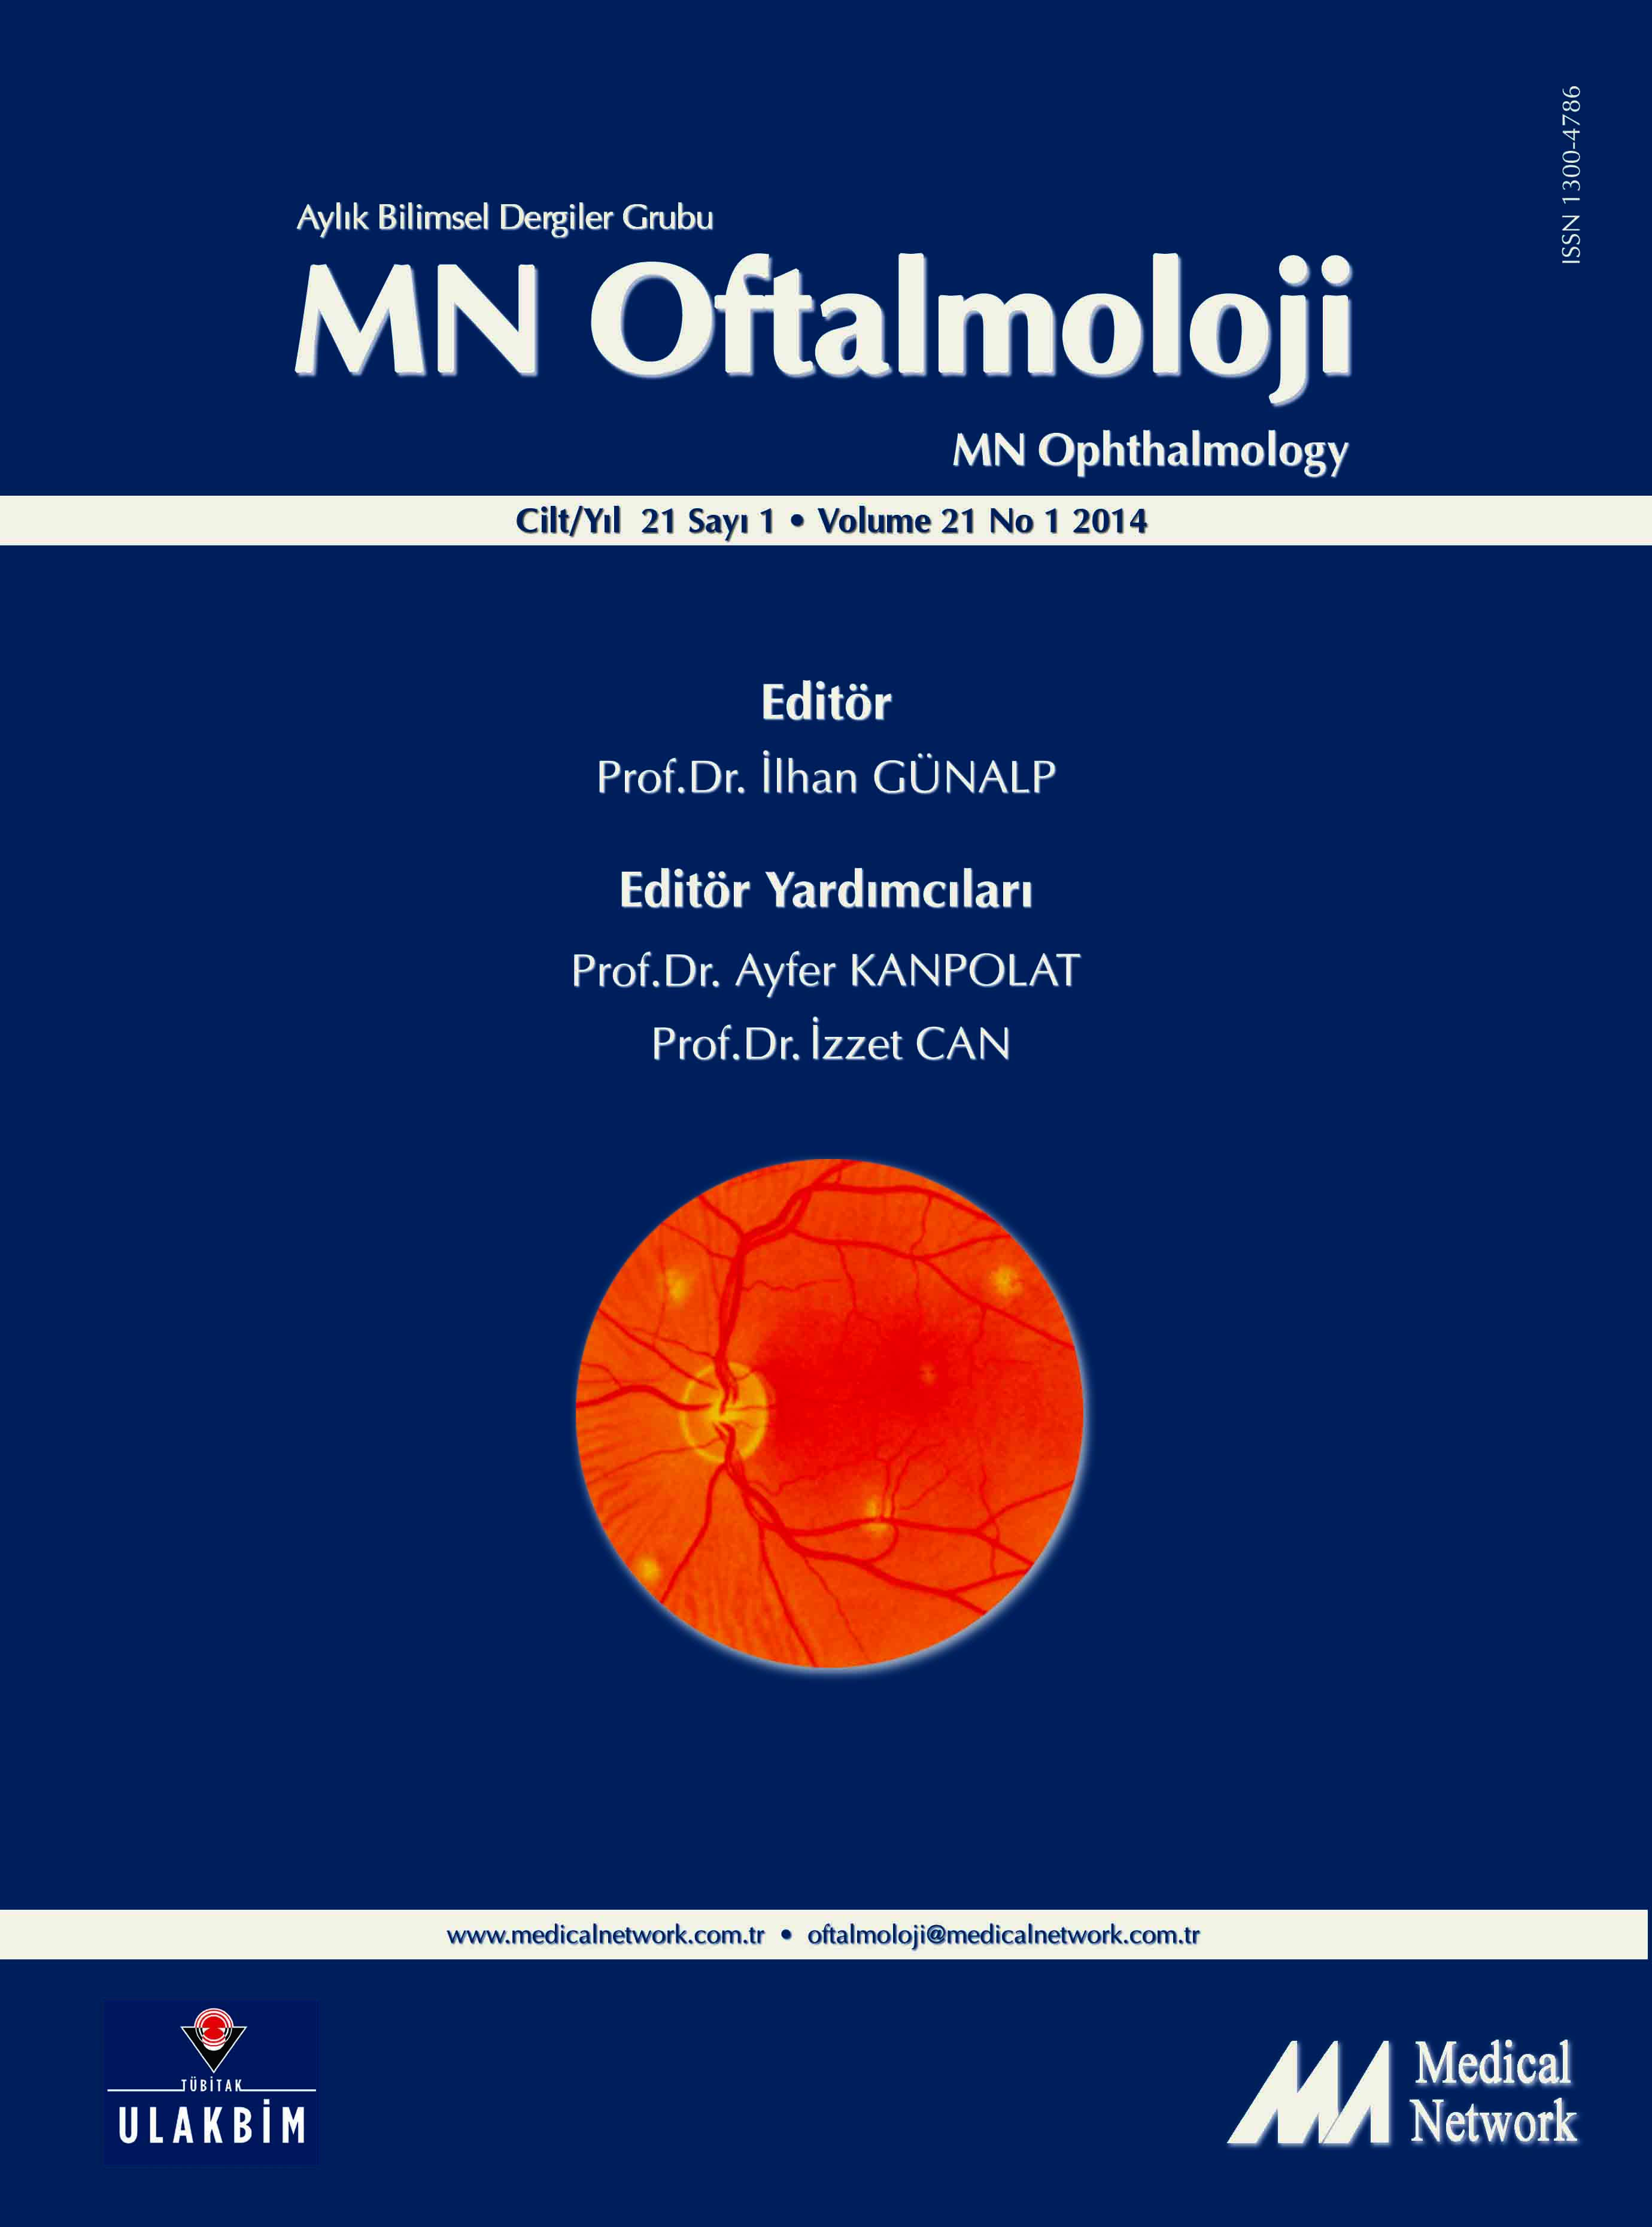 <p>MN Oftalmoloji Cilt: 21 Say: 1 2014 (MN Ophthalmology Volume: 21 No 1 2014)</p>